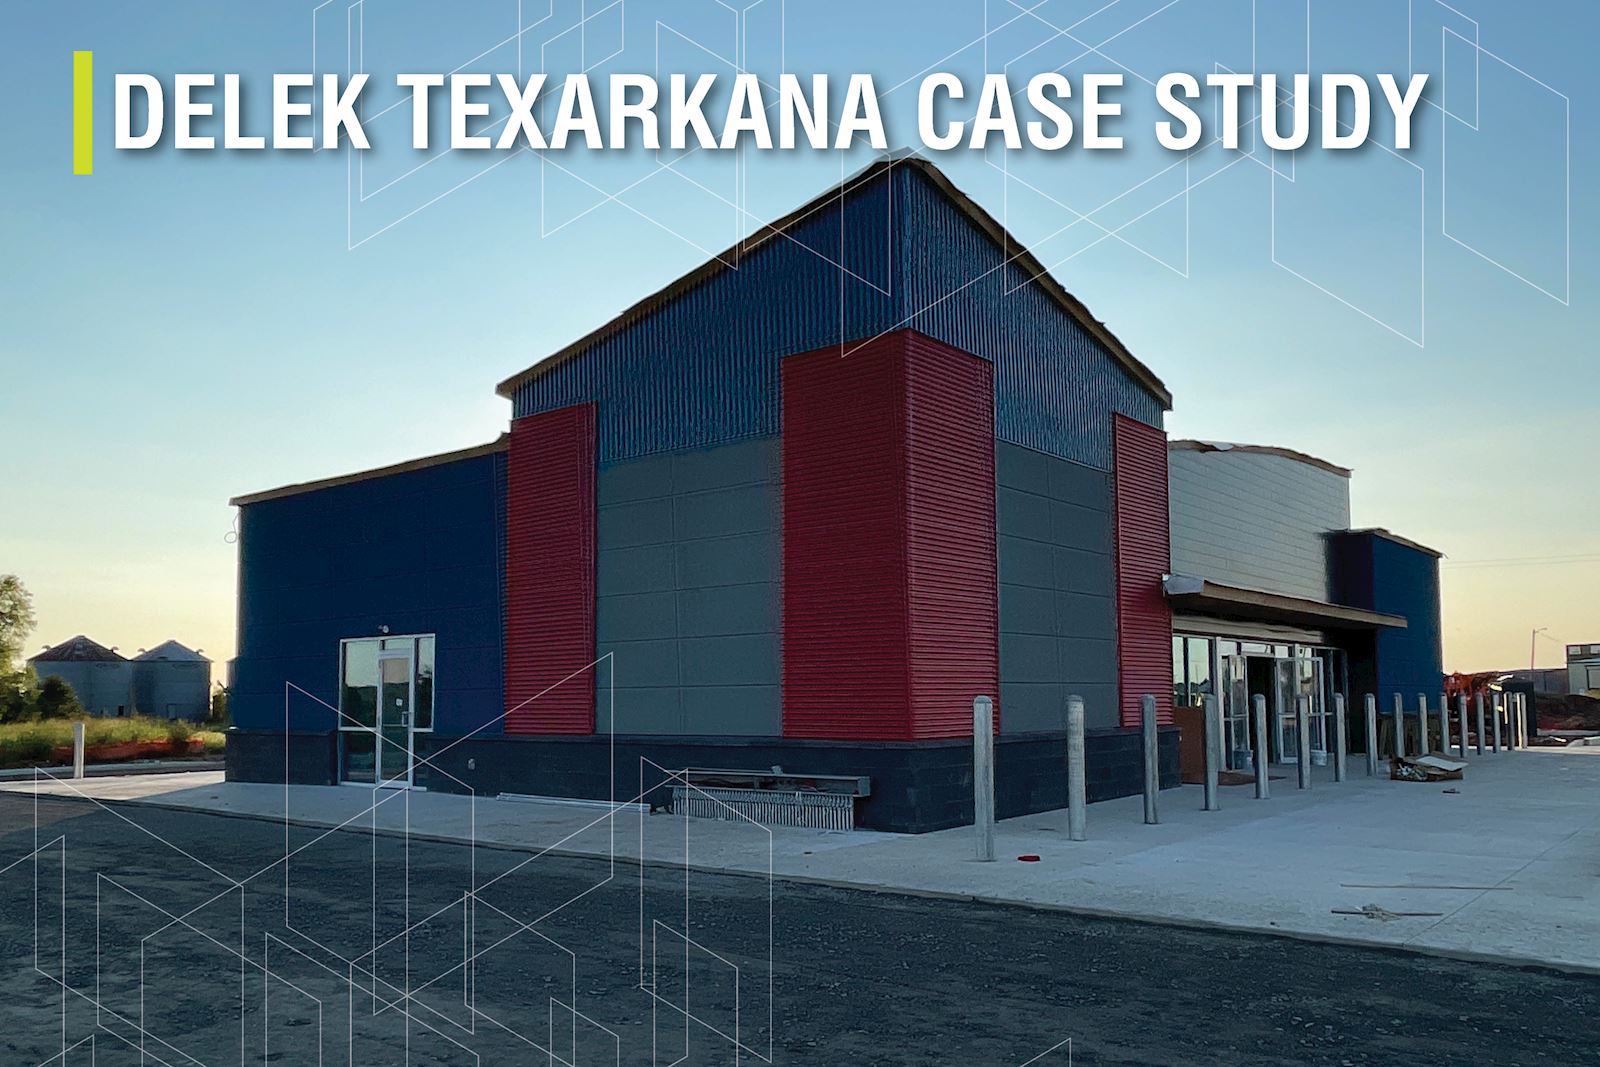 Texarkana Delek C-Store Case Study